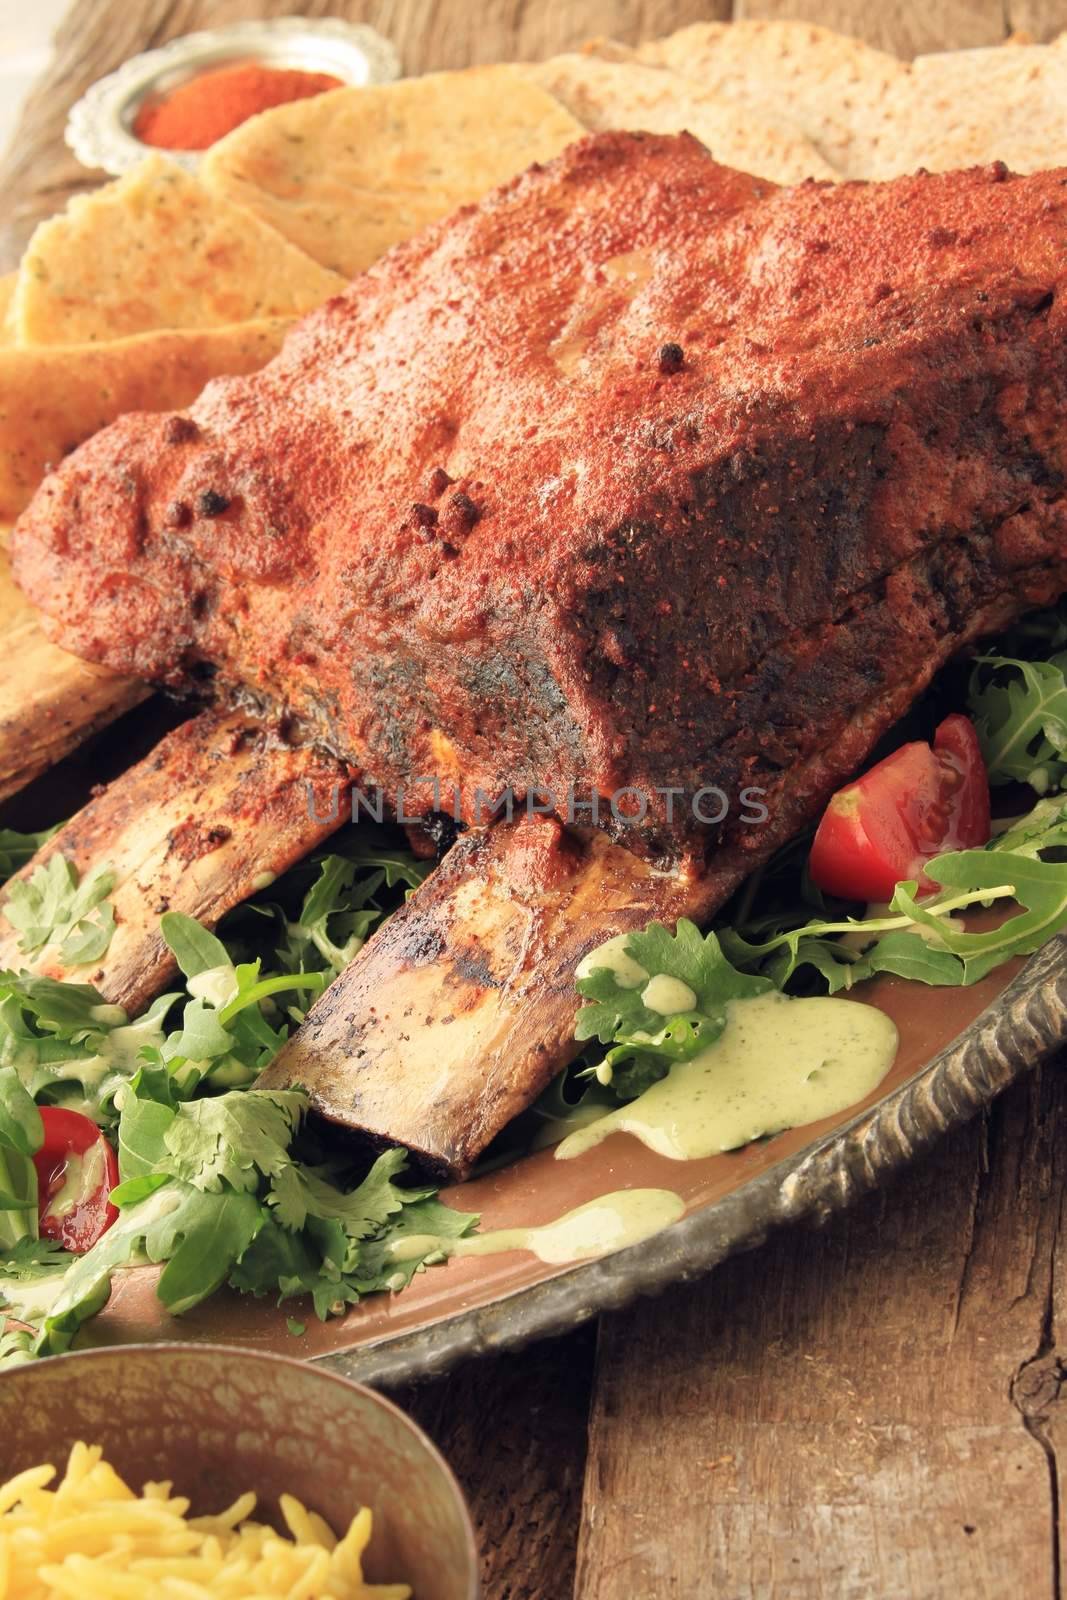 Indian beef rib by neil_langan